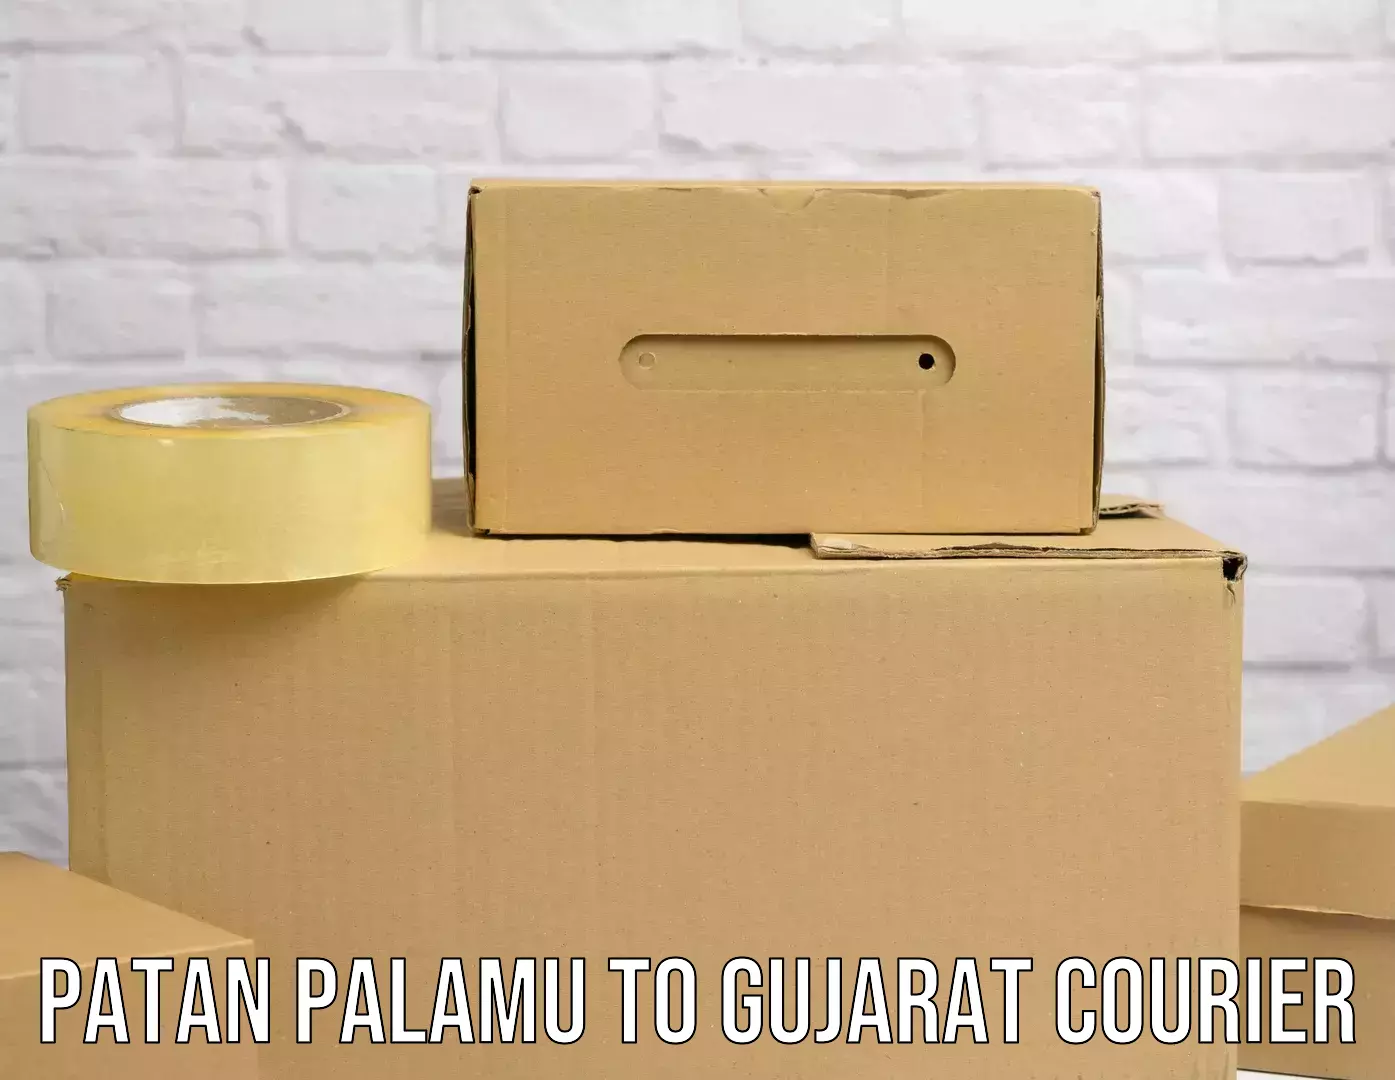 Expedited shipping methods Patan Palamu to Dhanera